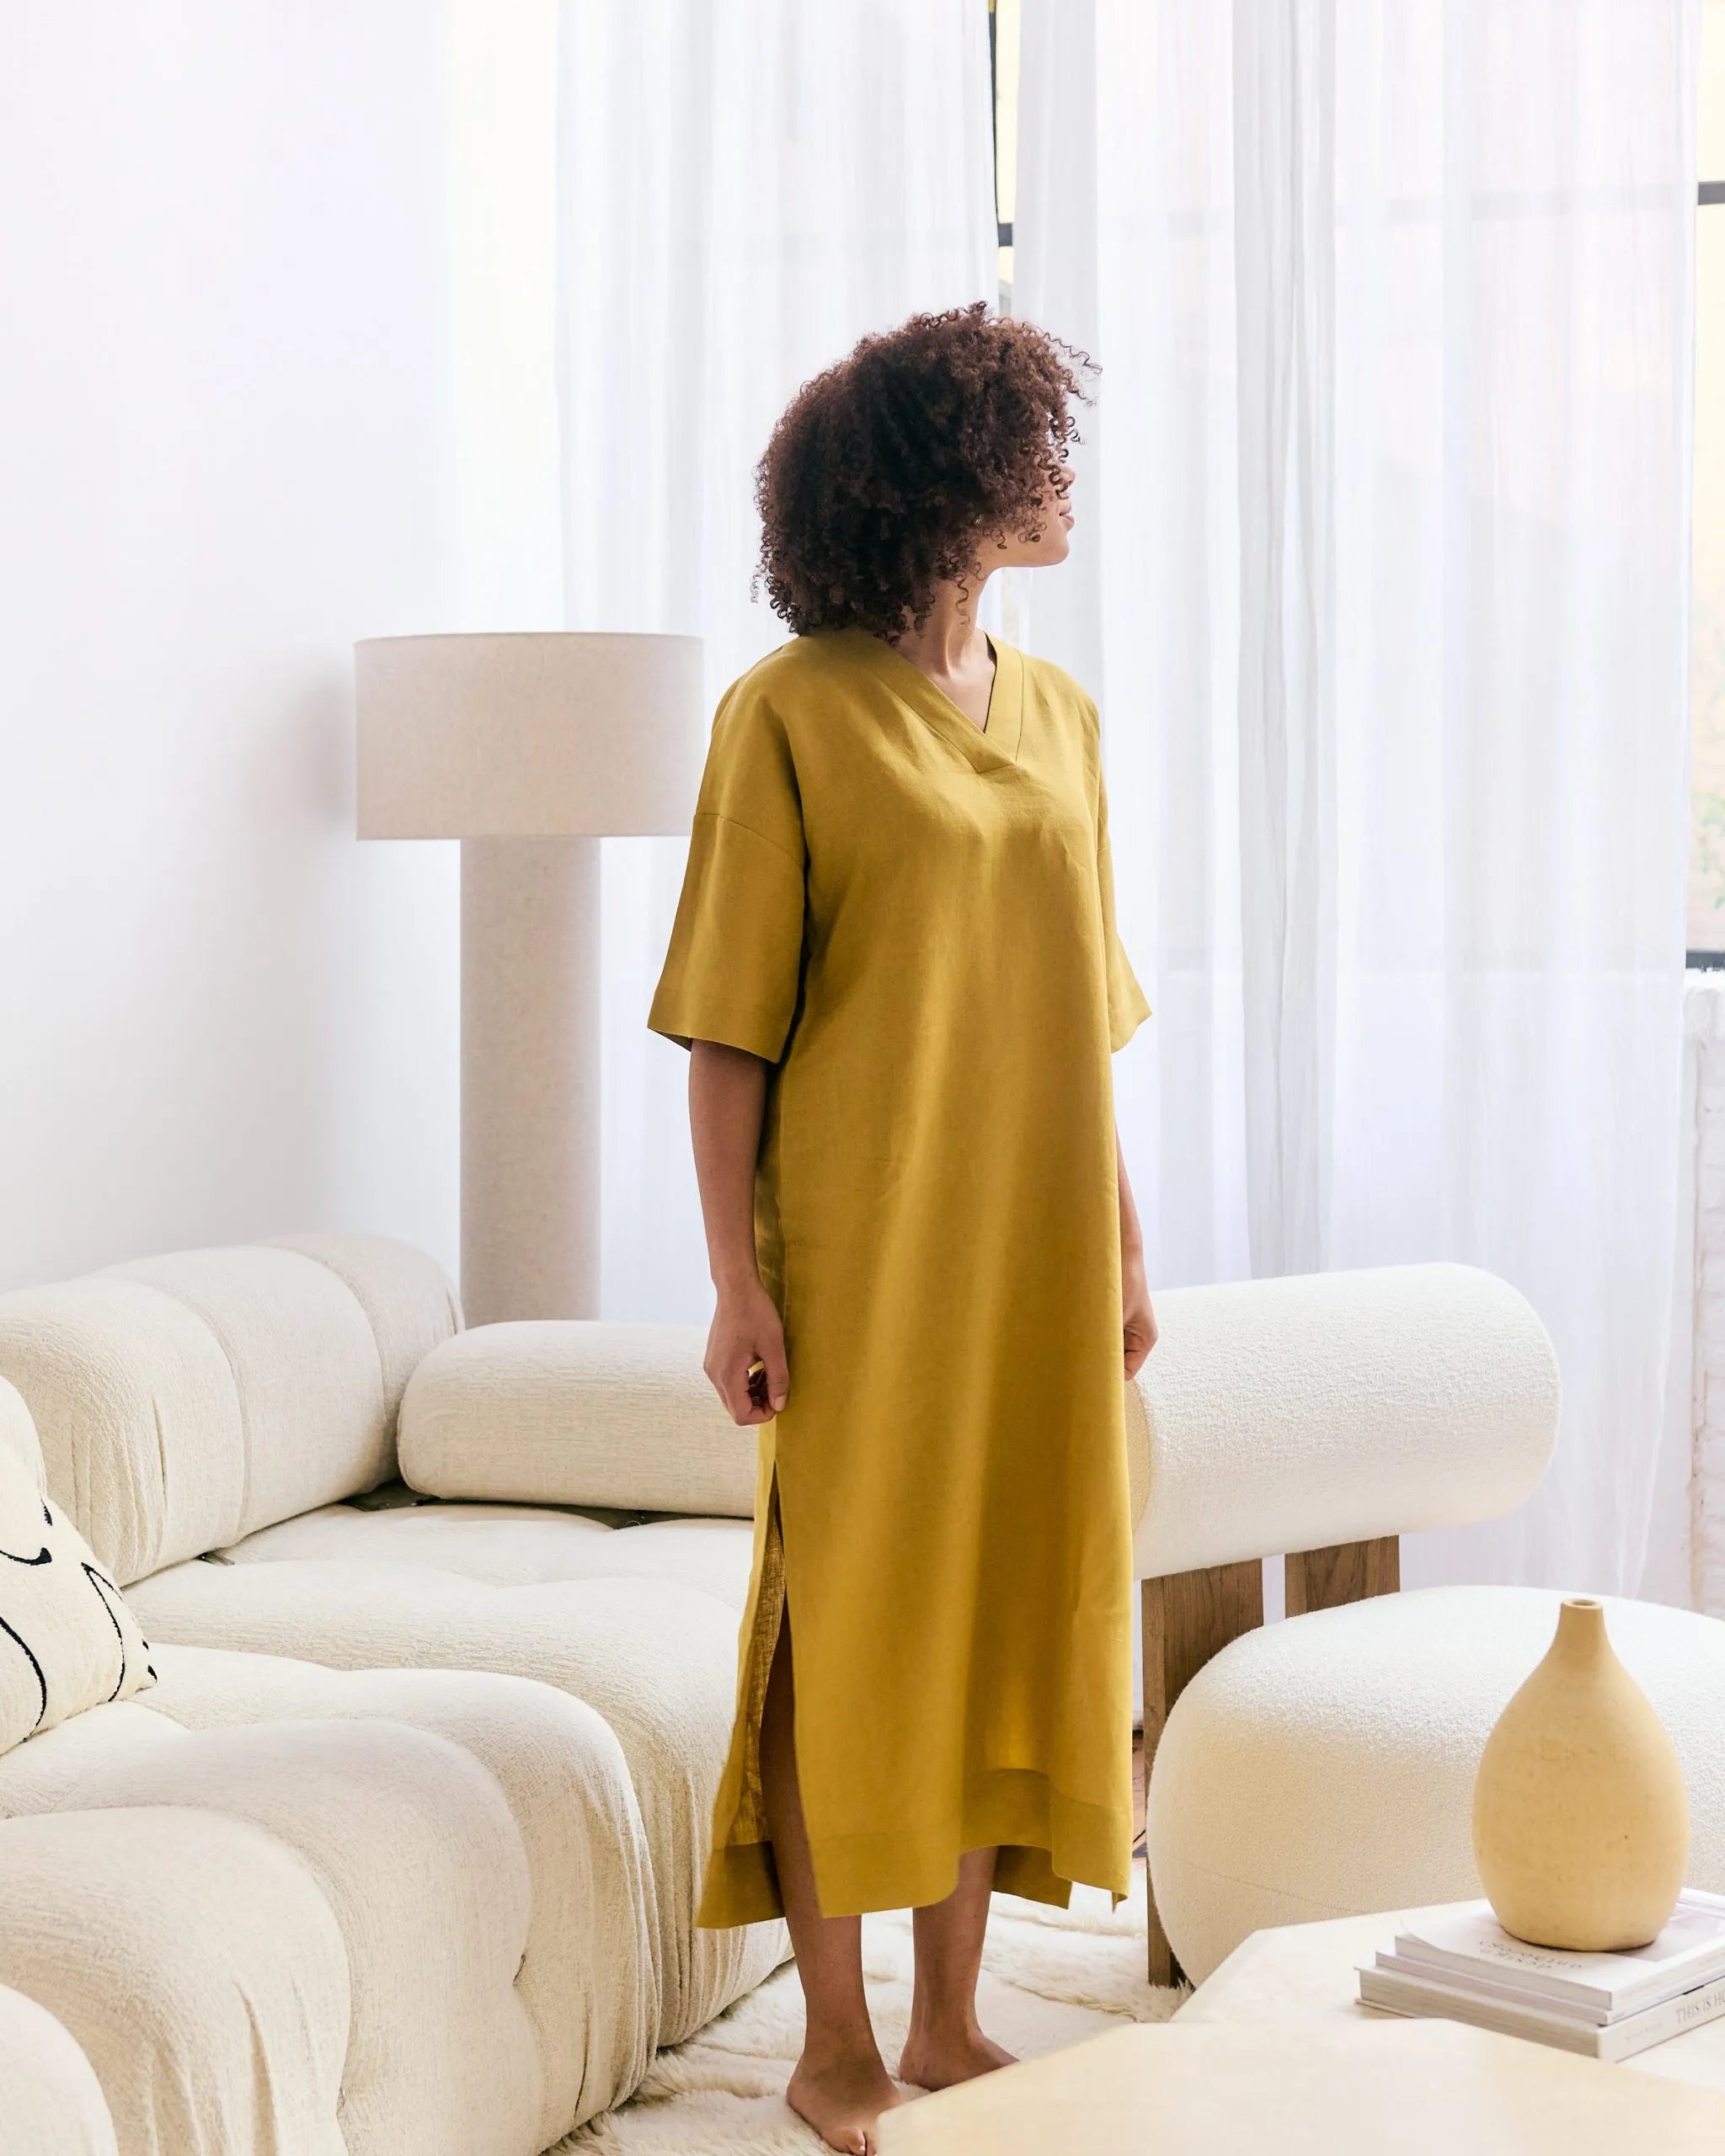 Mustard yellow straight dress made of 100% Belgian linen